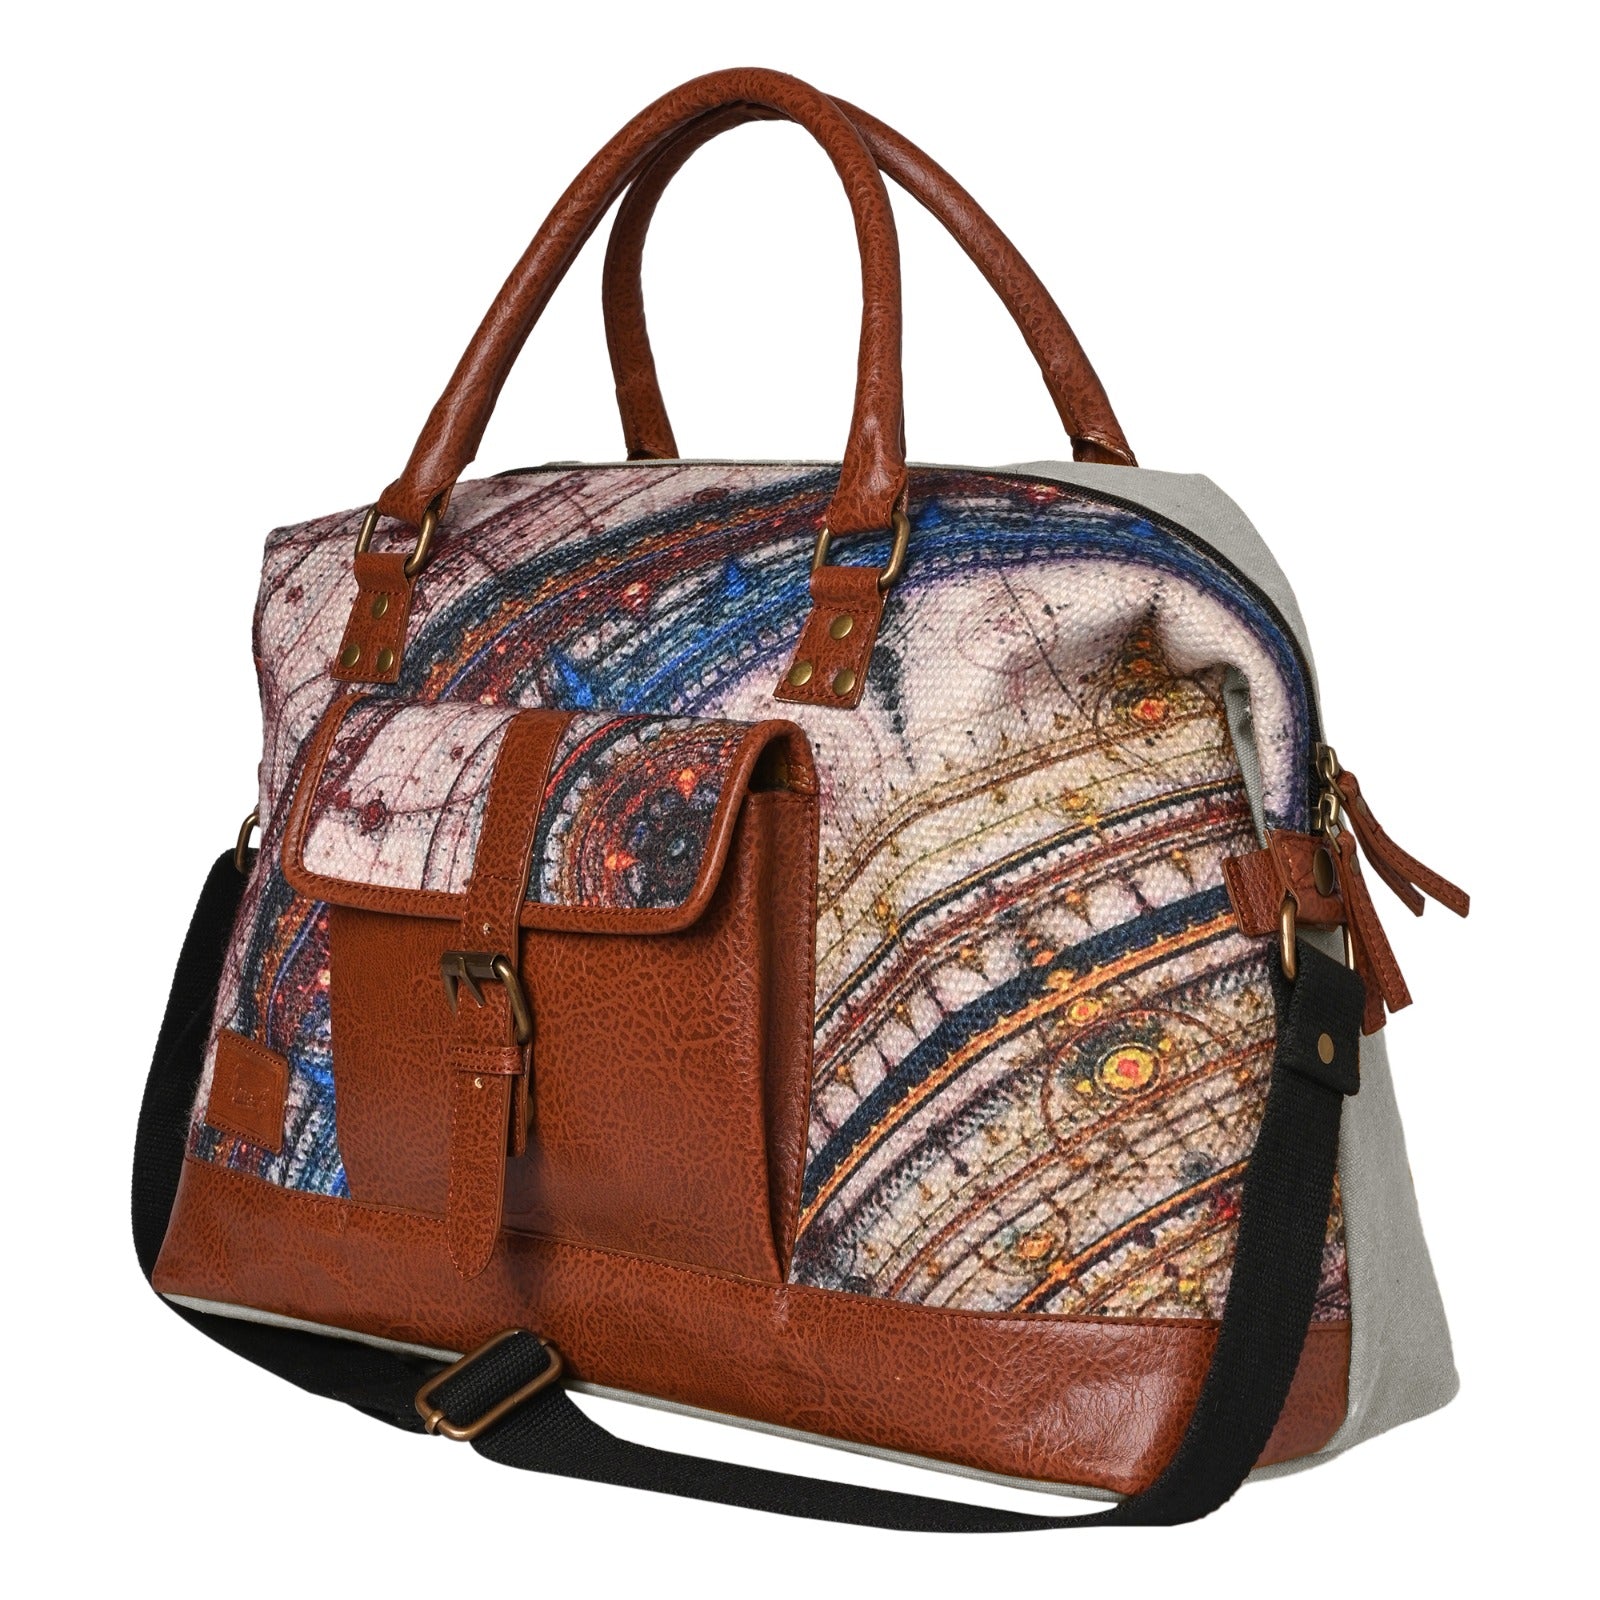 Mona B 100% Cotton Astro Duffel Travel Bag